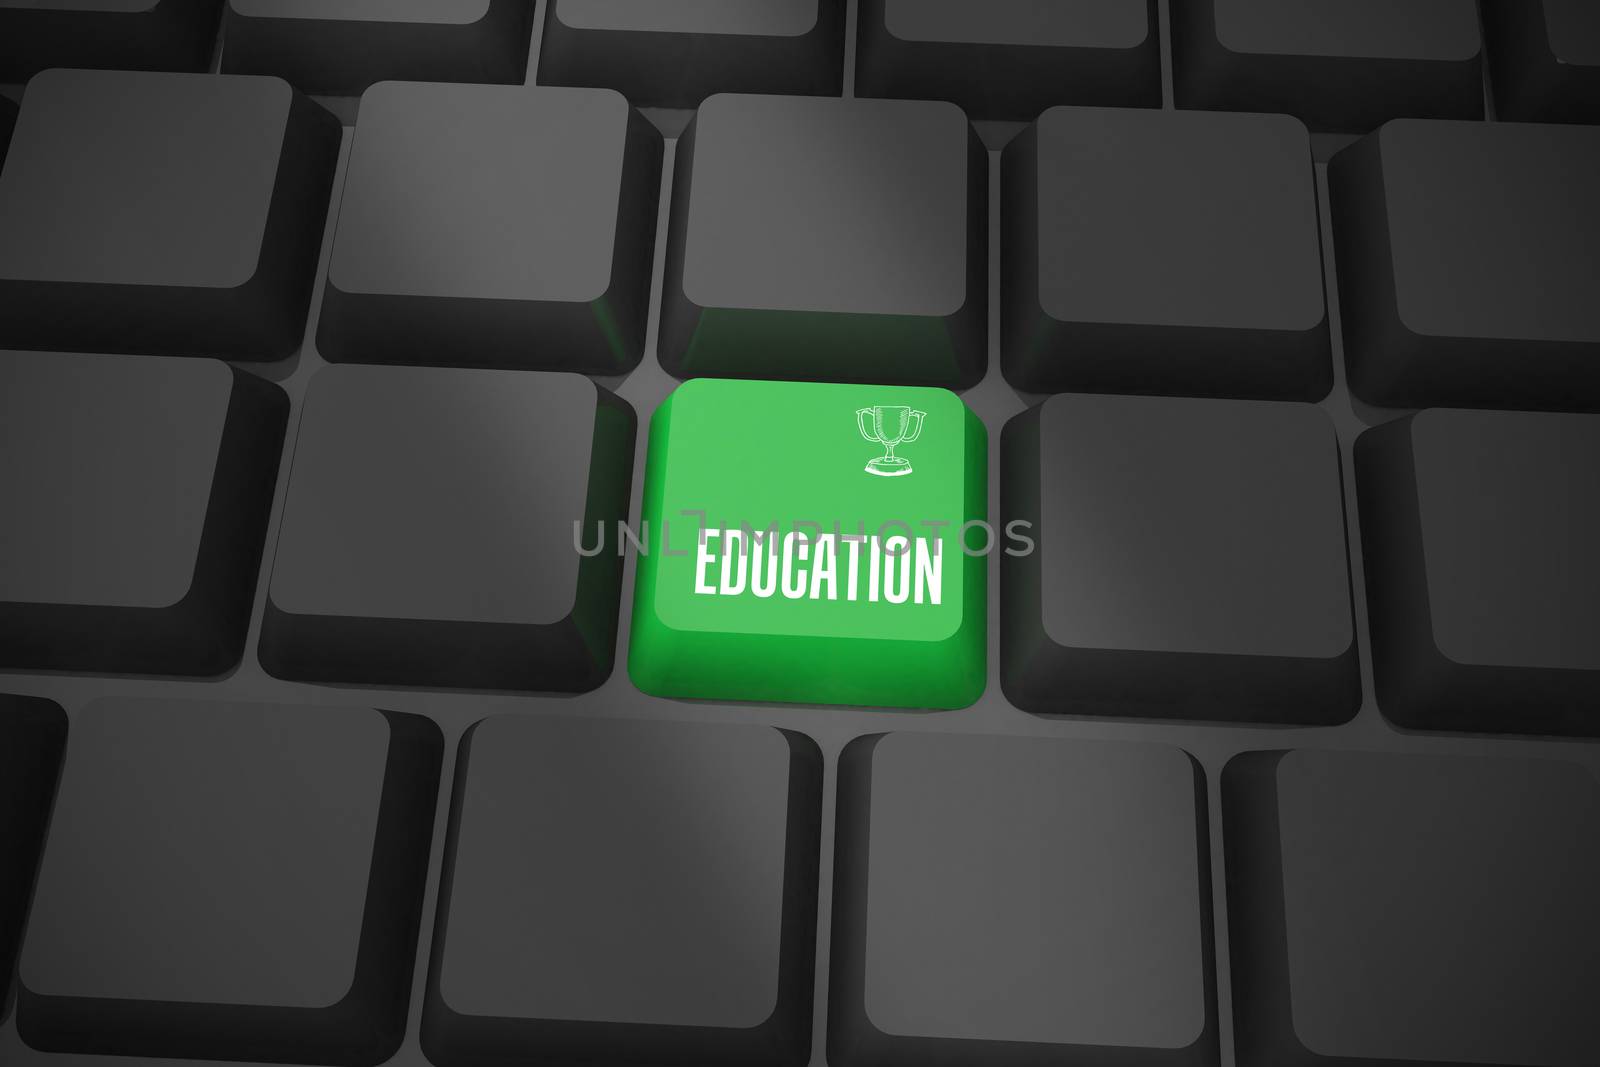 Education on black keyboard with green key by Wavebreakmedia